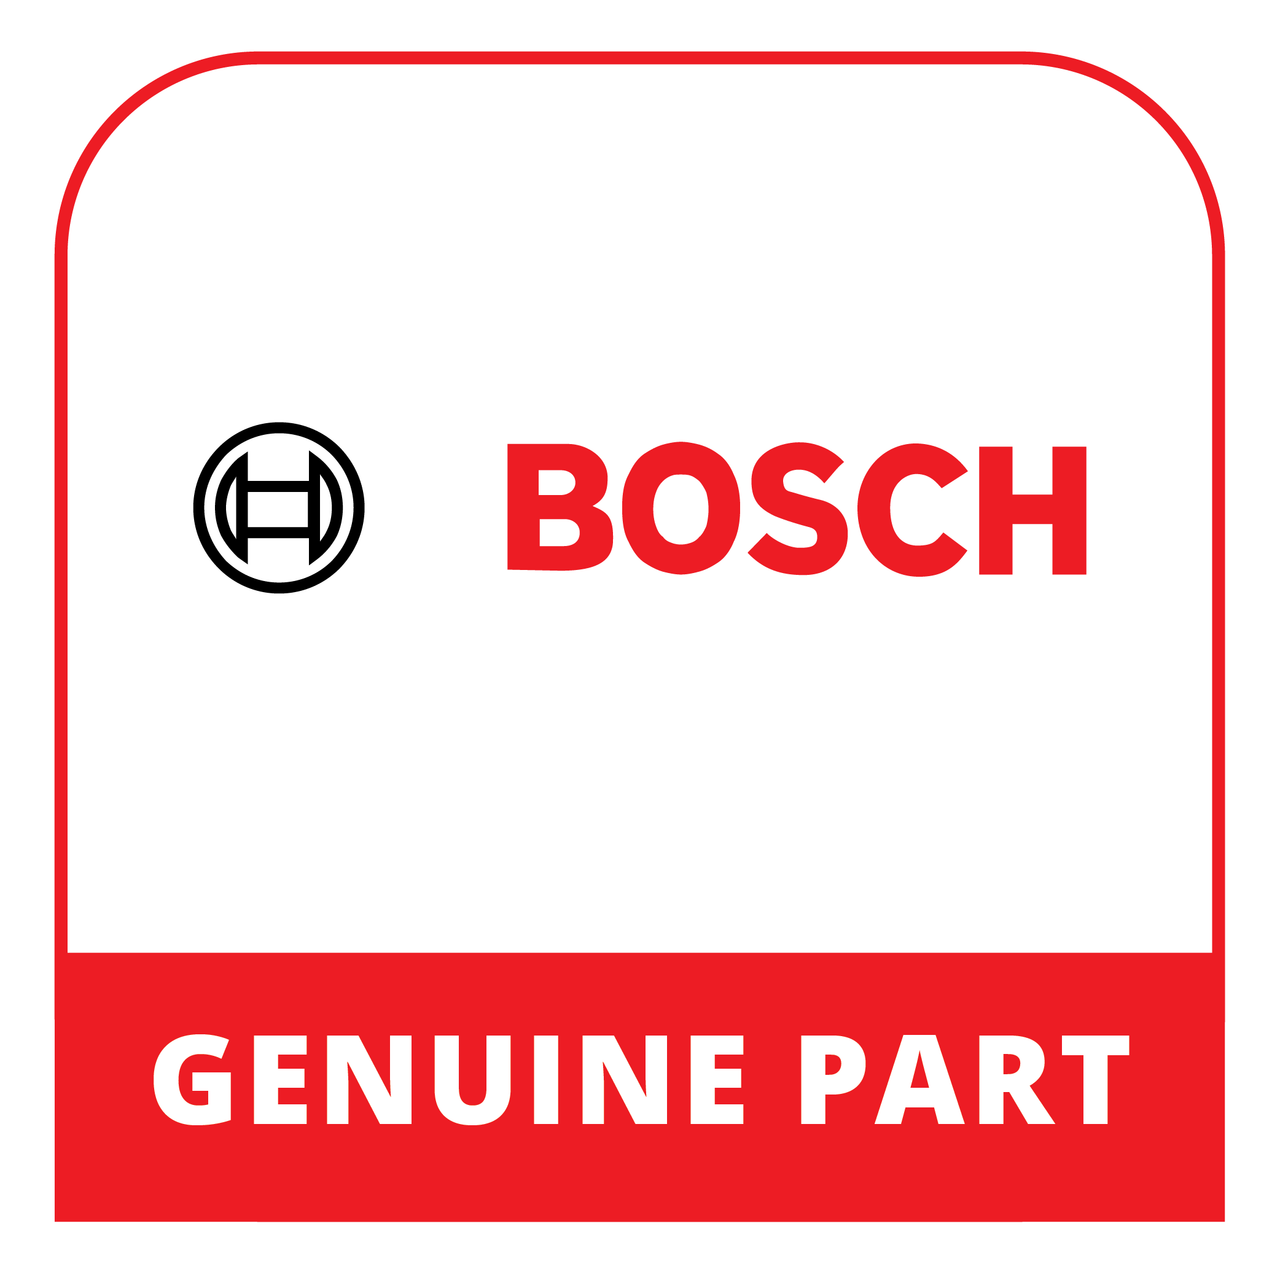 Bosch (Thermador) 10011608 - Screw - Genuine Bosch (Thermador) Part